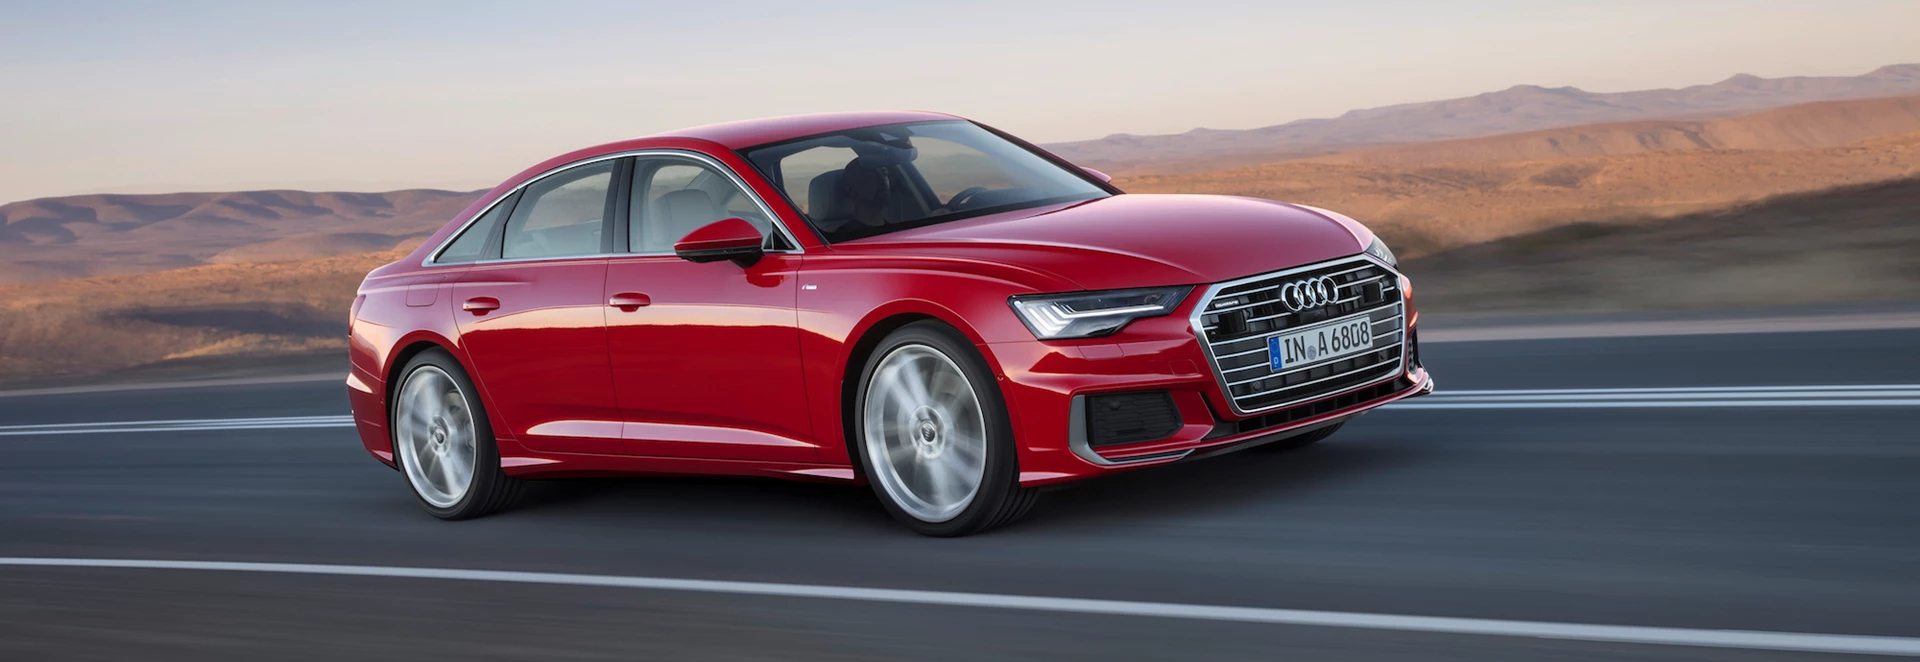 Hi-tech 2018 Audi A6 revealed ahead of Geneva Motor Show debut